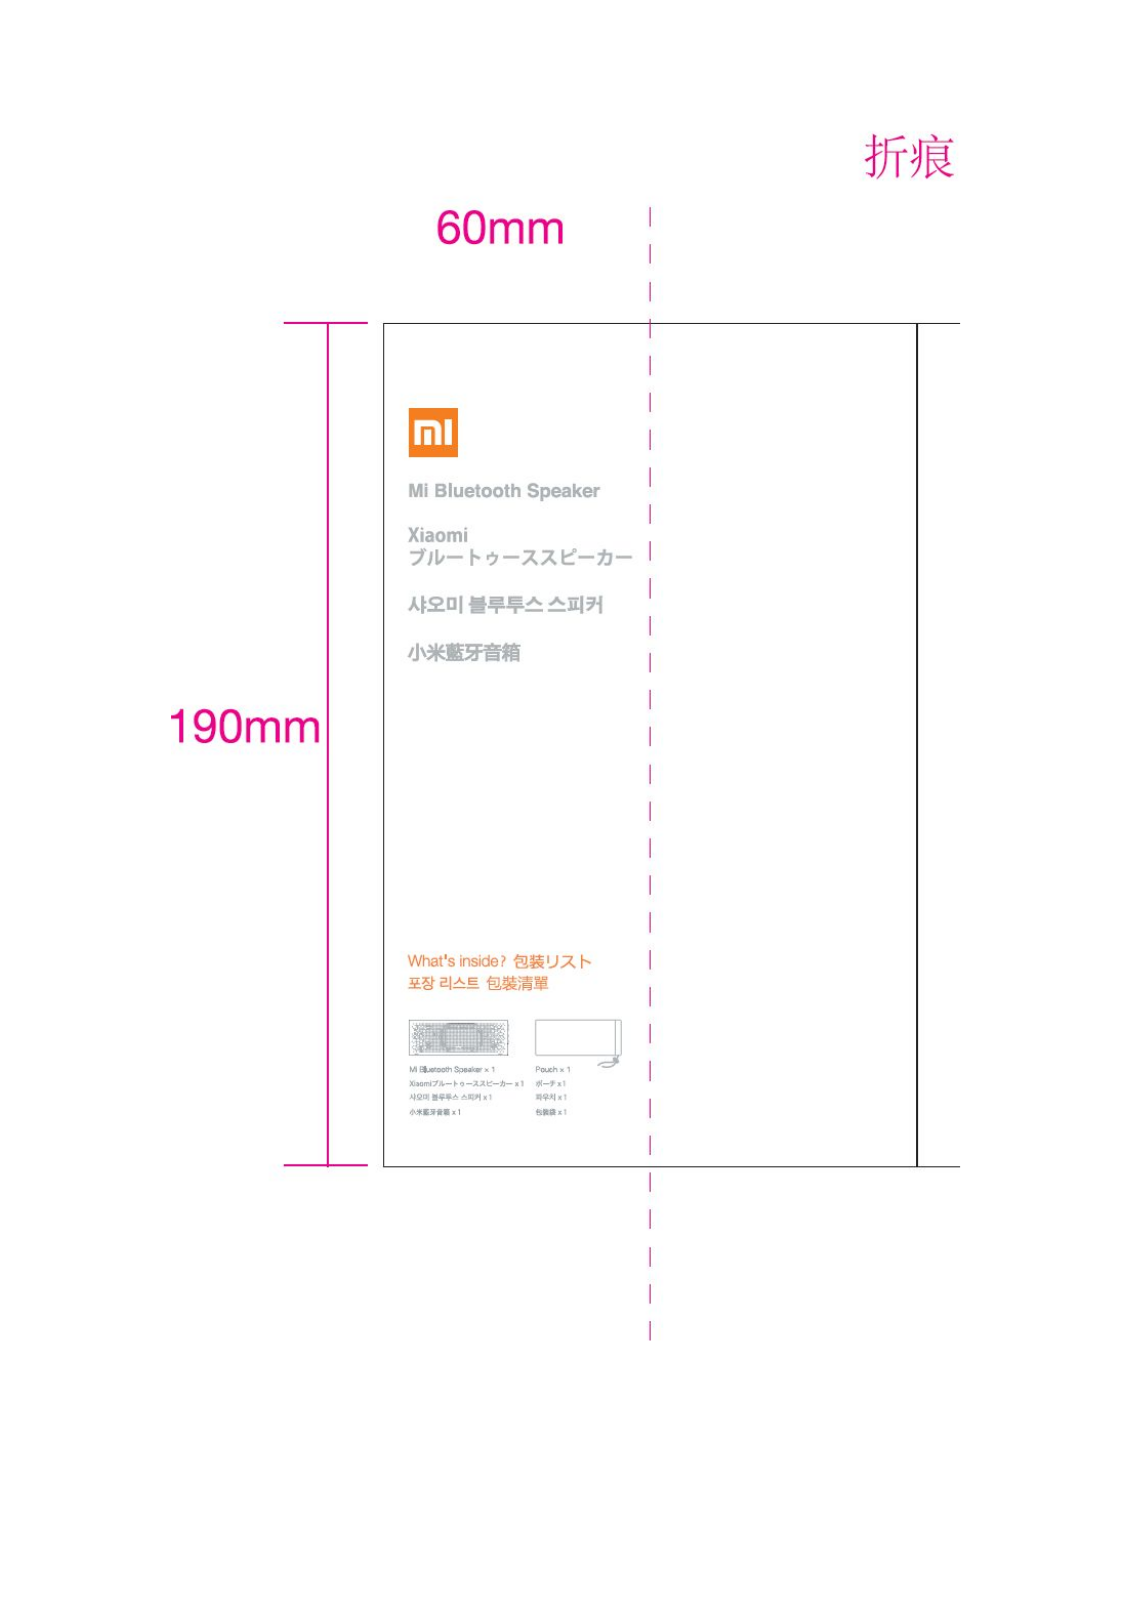 Xiaomi MDZ 15 DB User Manual